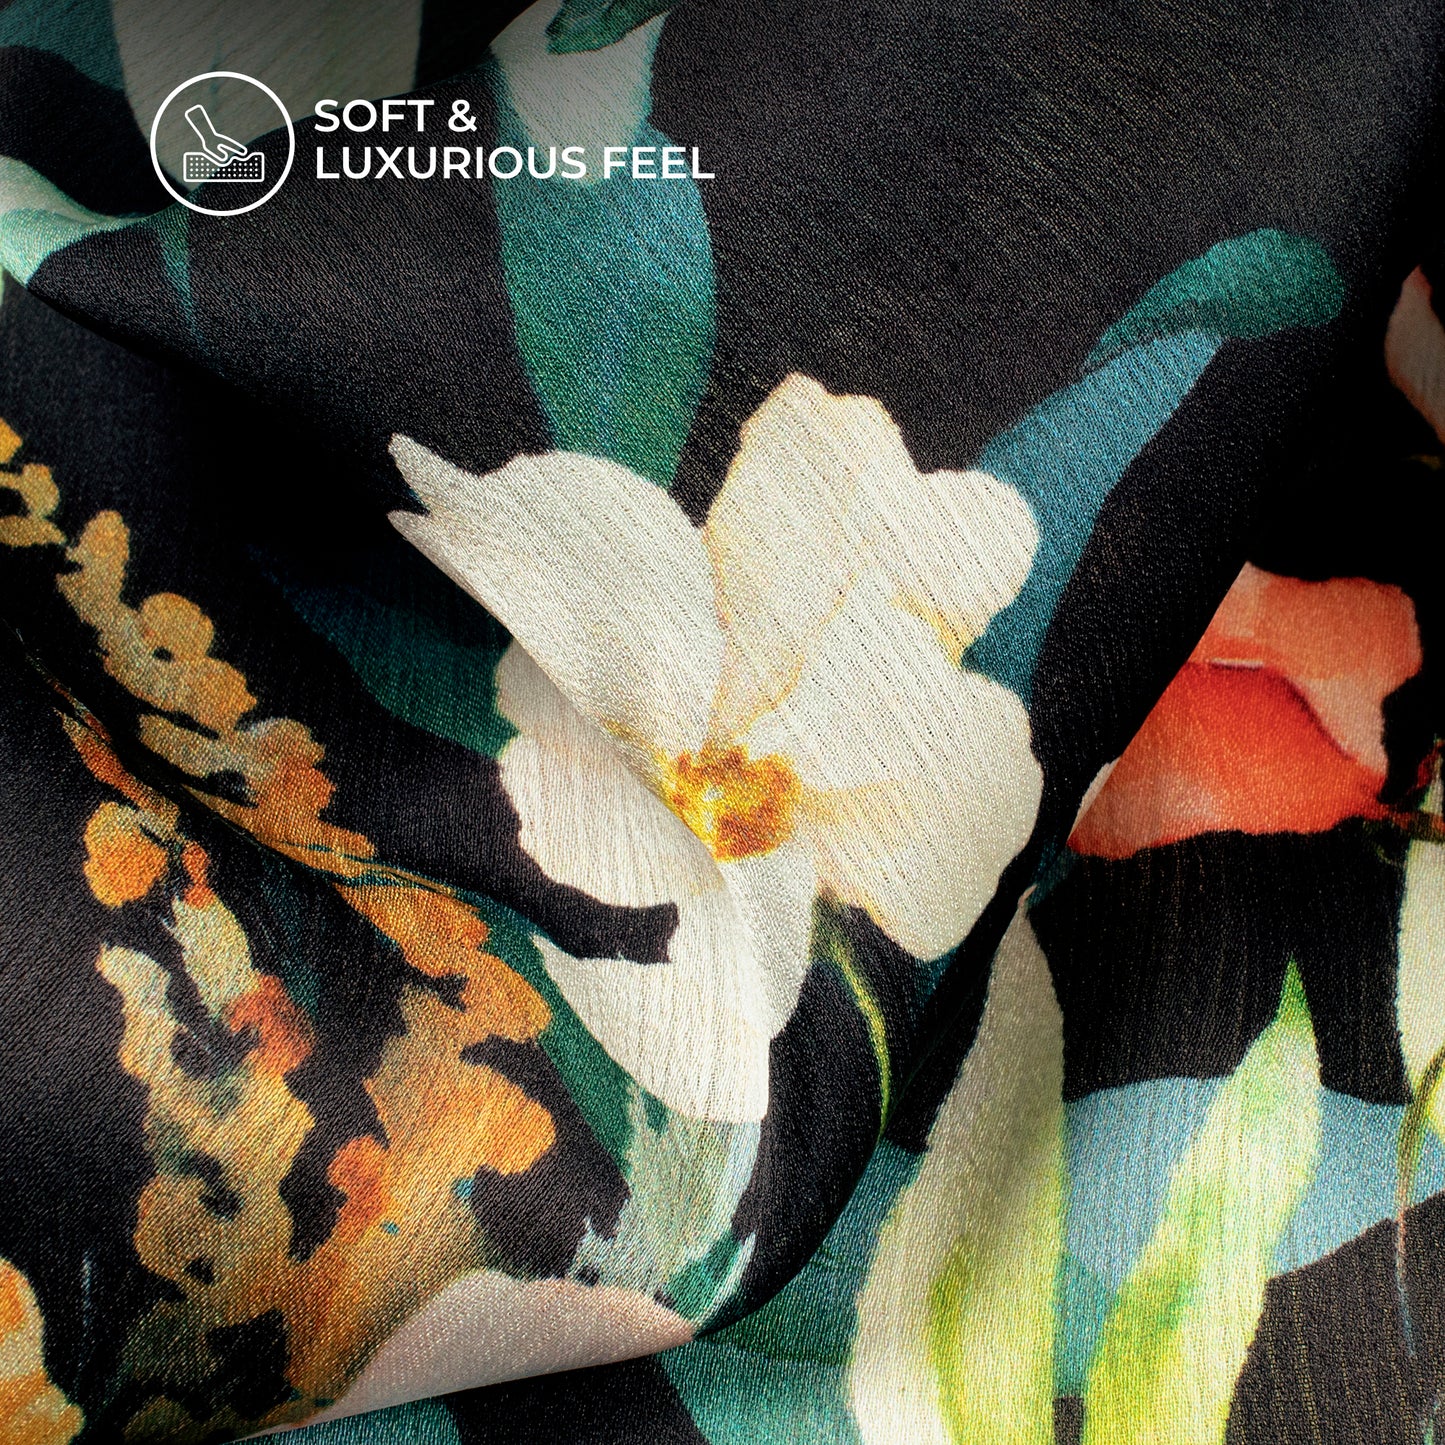 Vintage Floral Digital Print Chiffon Satin Fabric